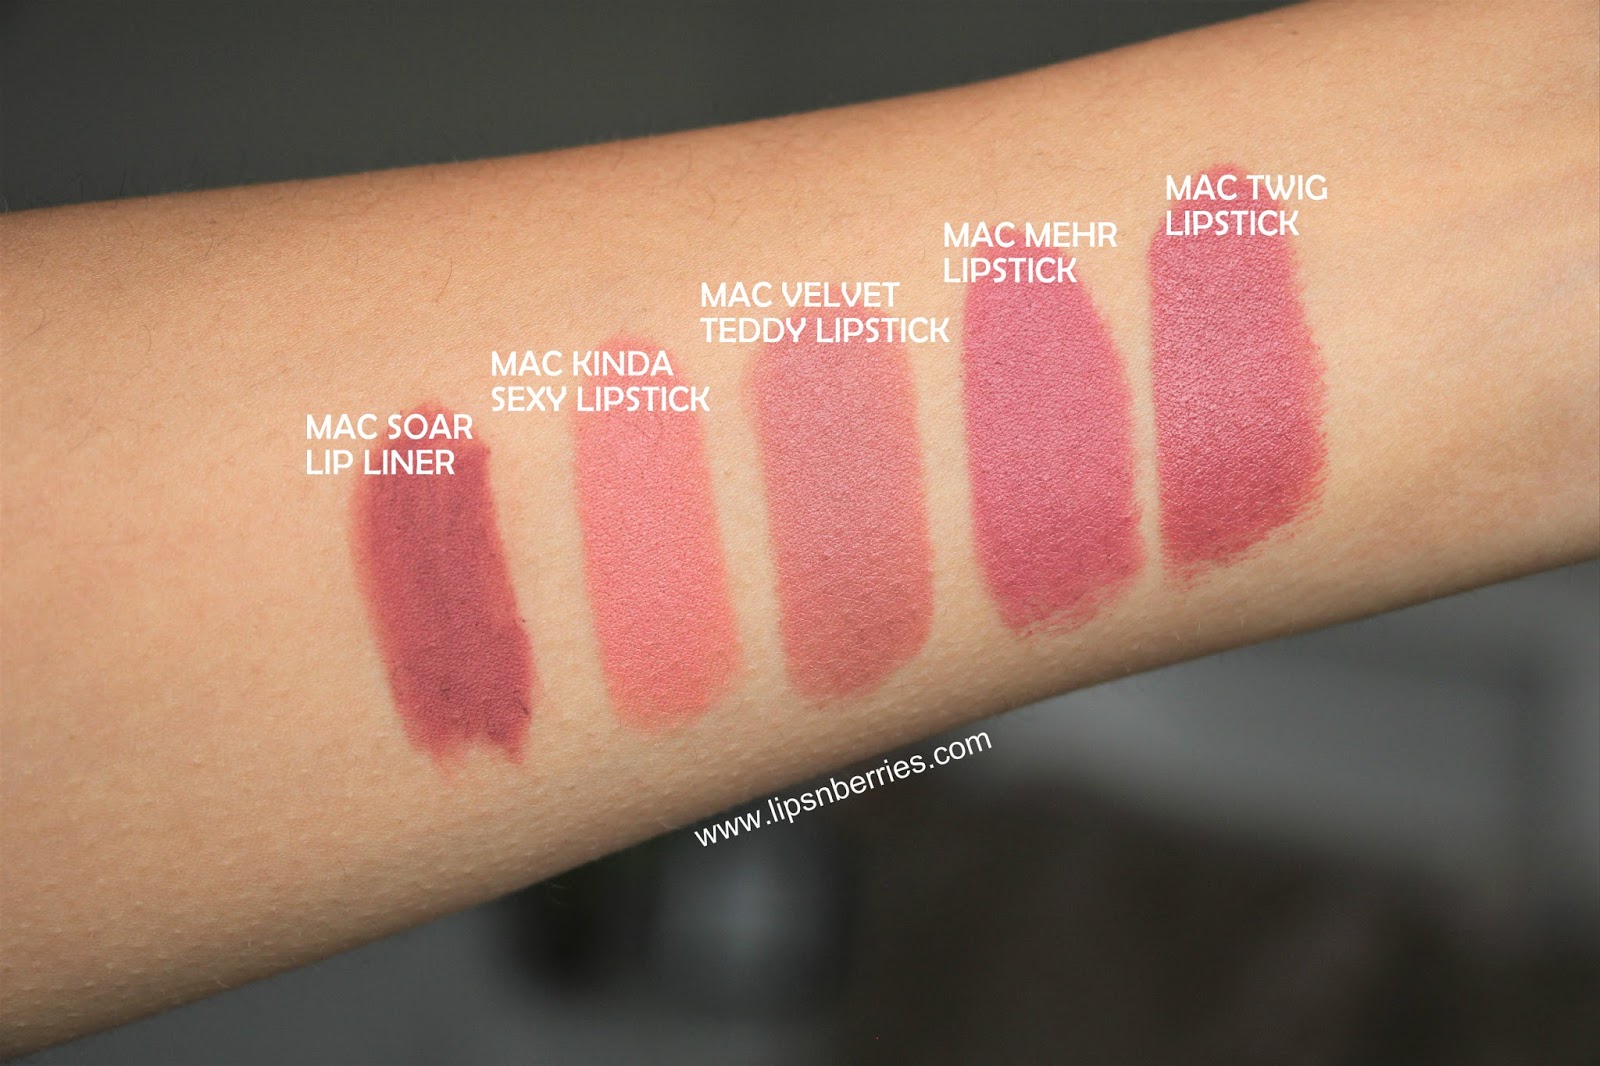 Mac lip liner and lipstick set